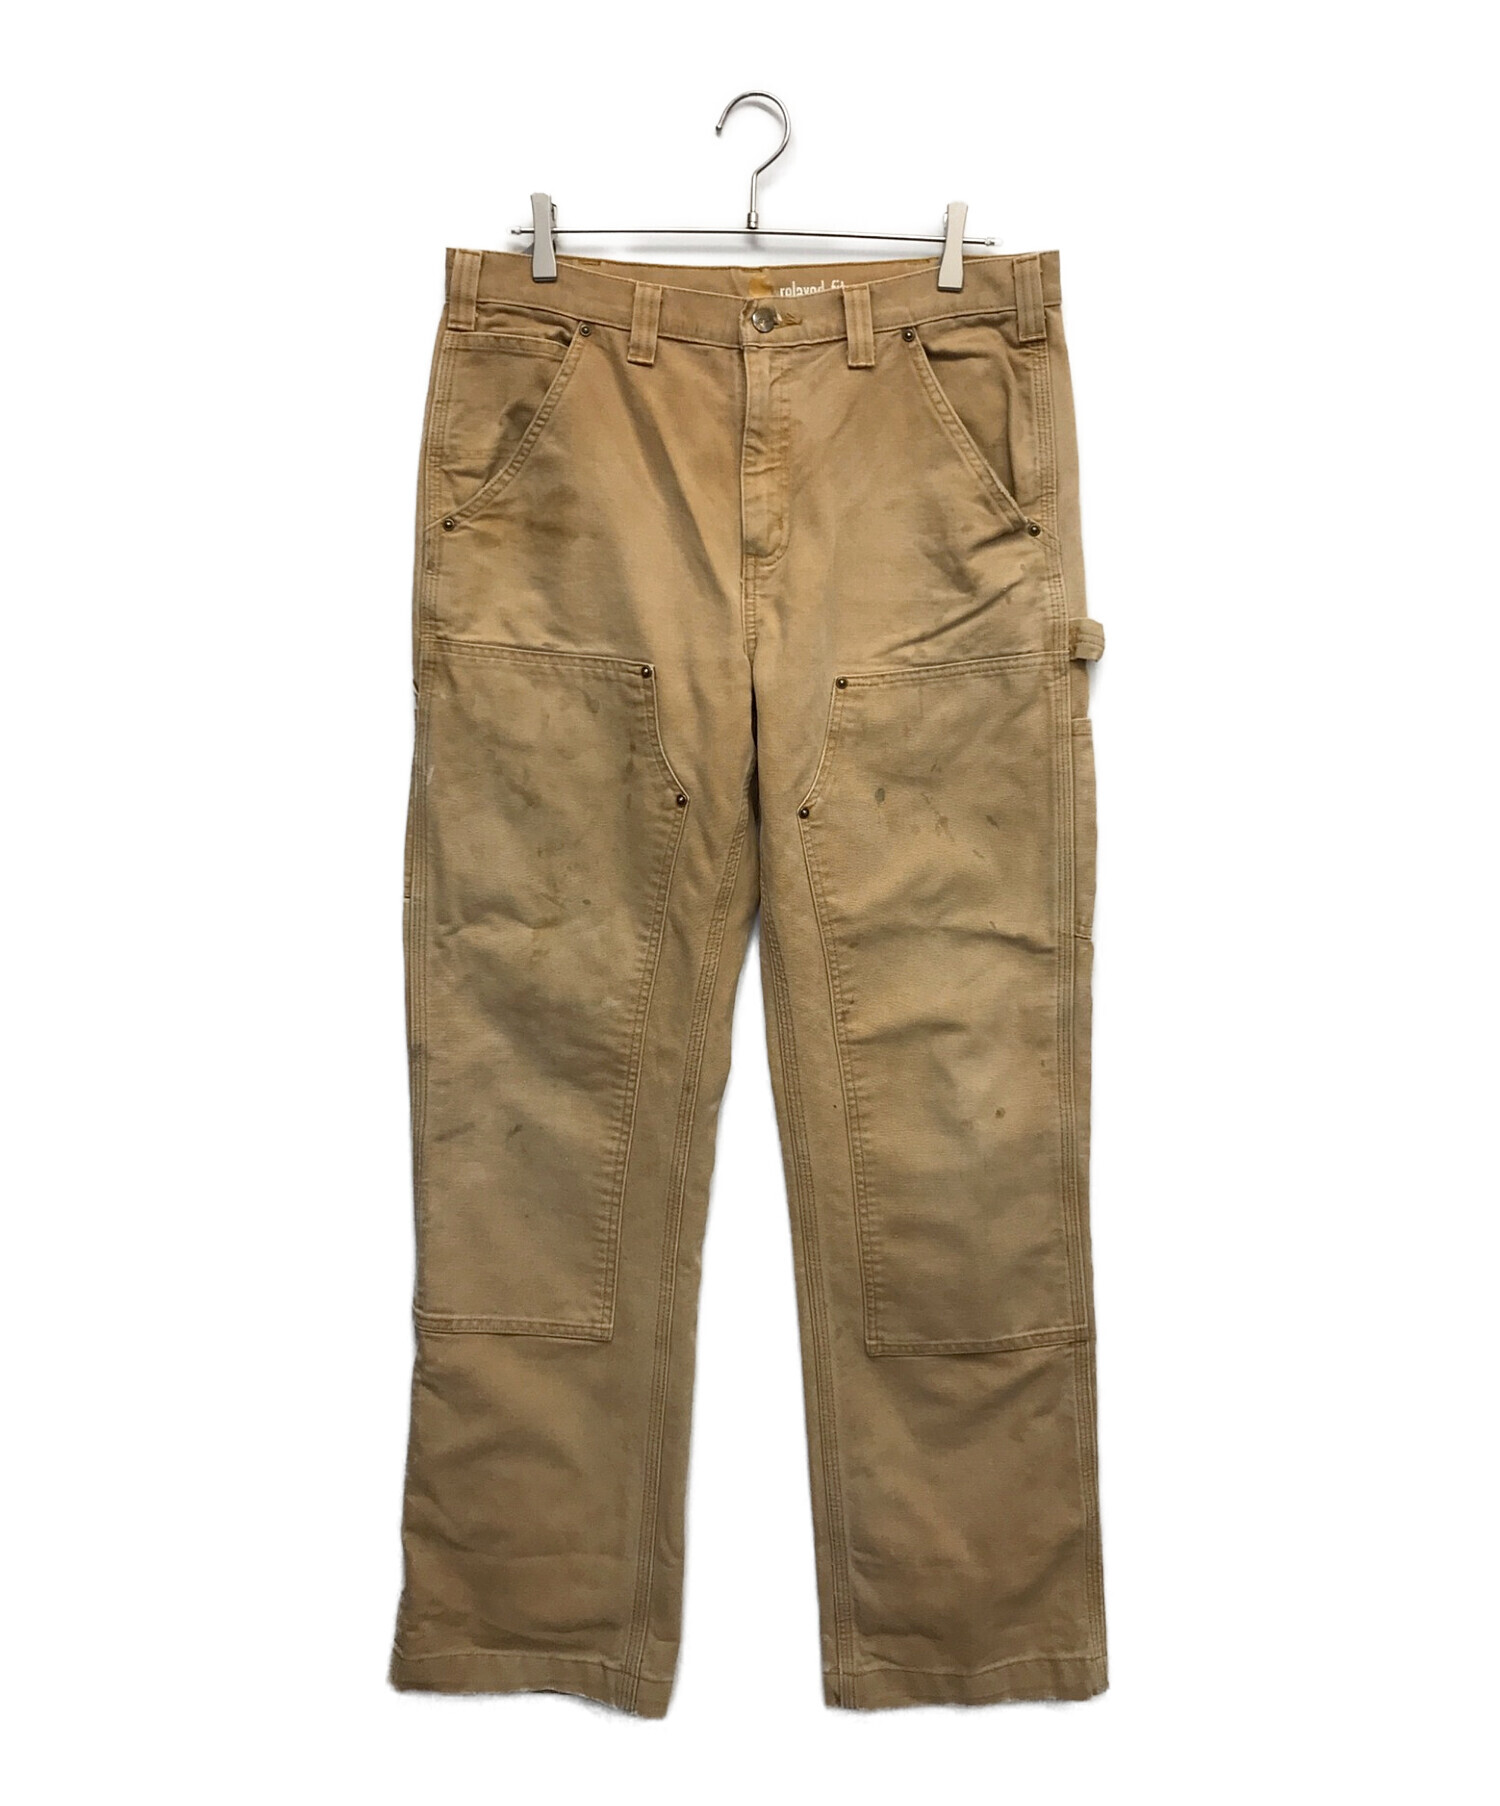 79cm32×32 carhartt double knee painter pants